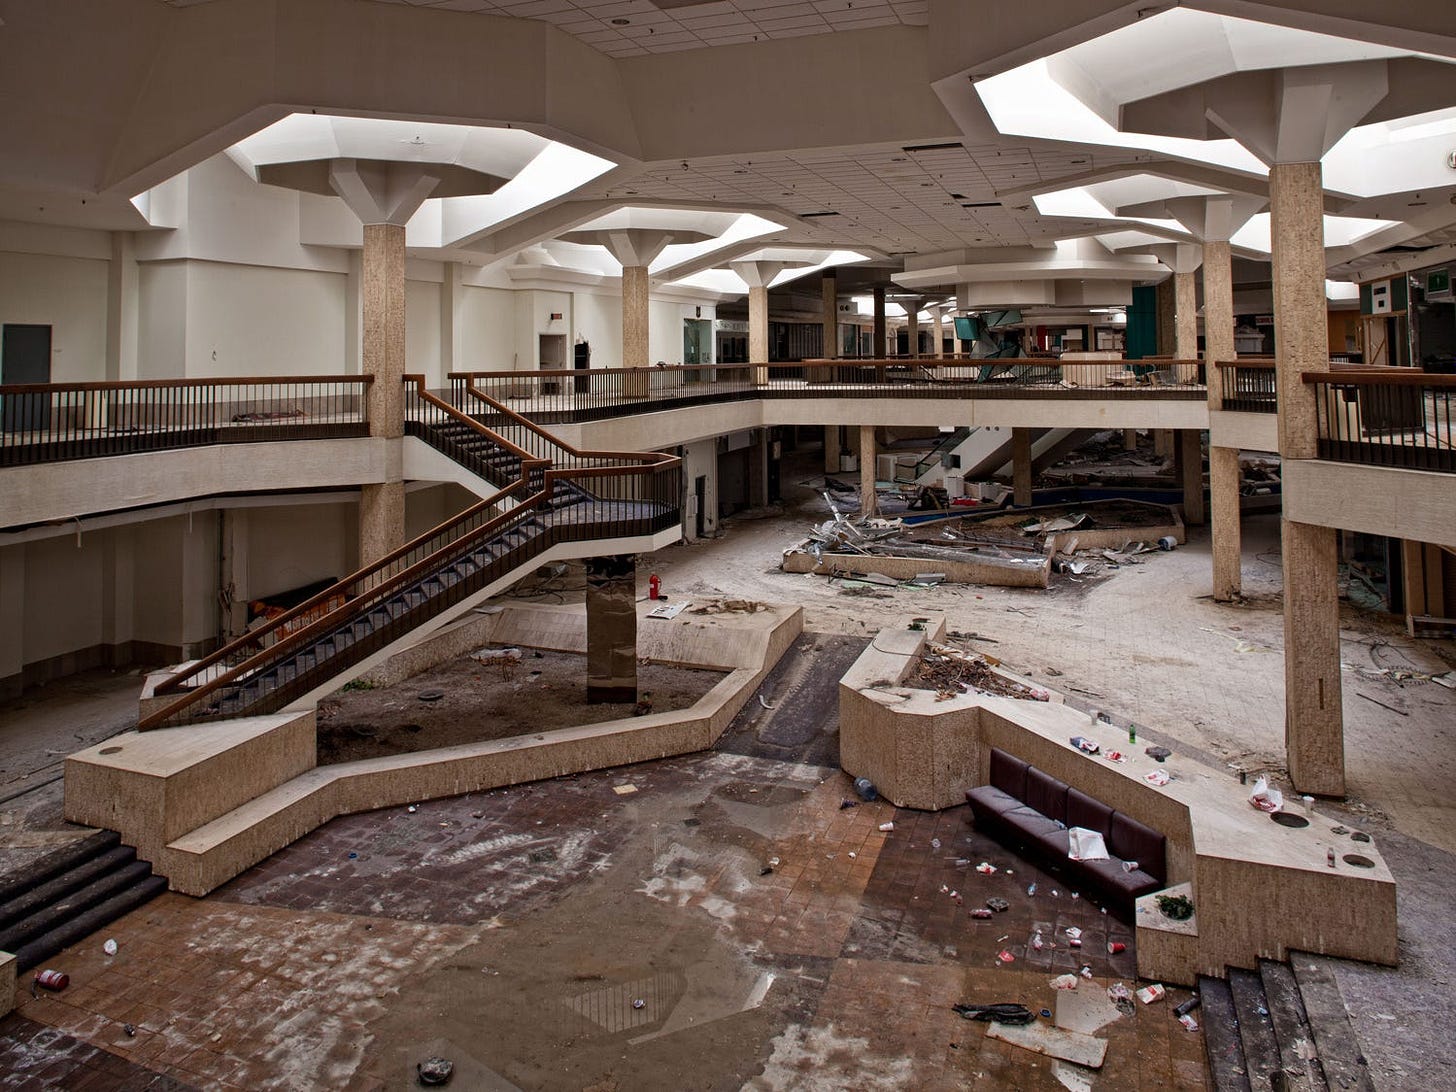 Randall Park Mall: Go inside an abandoned shopping center